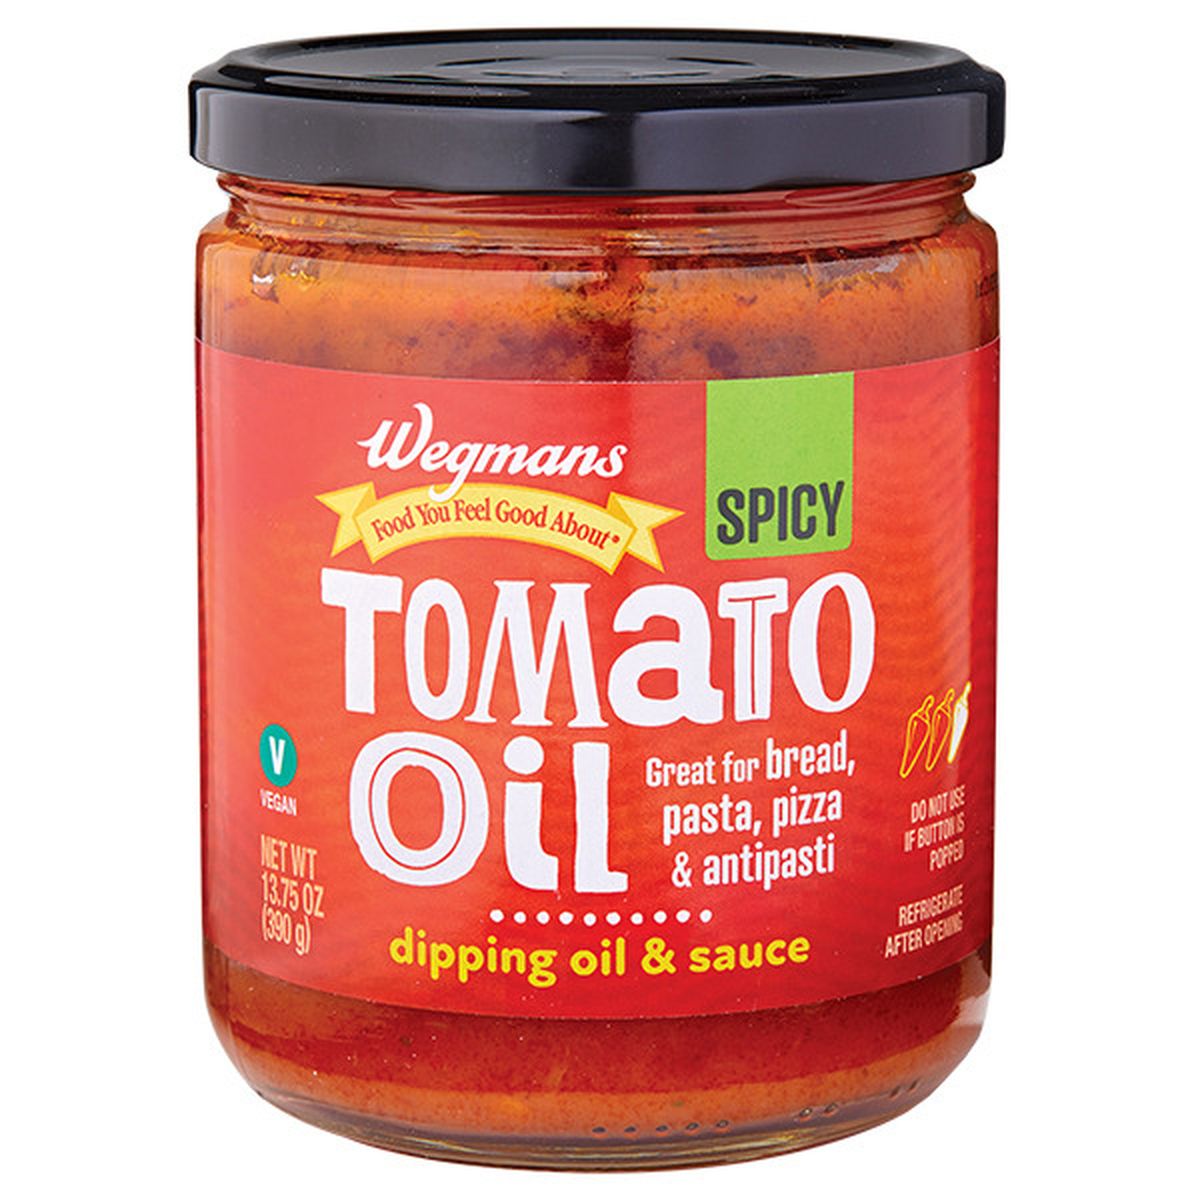 Calories in Wegmans Spicy Tomato Oil